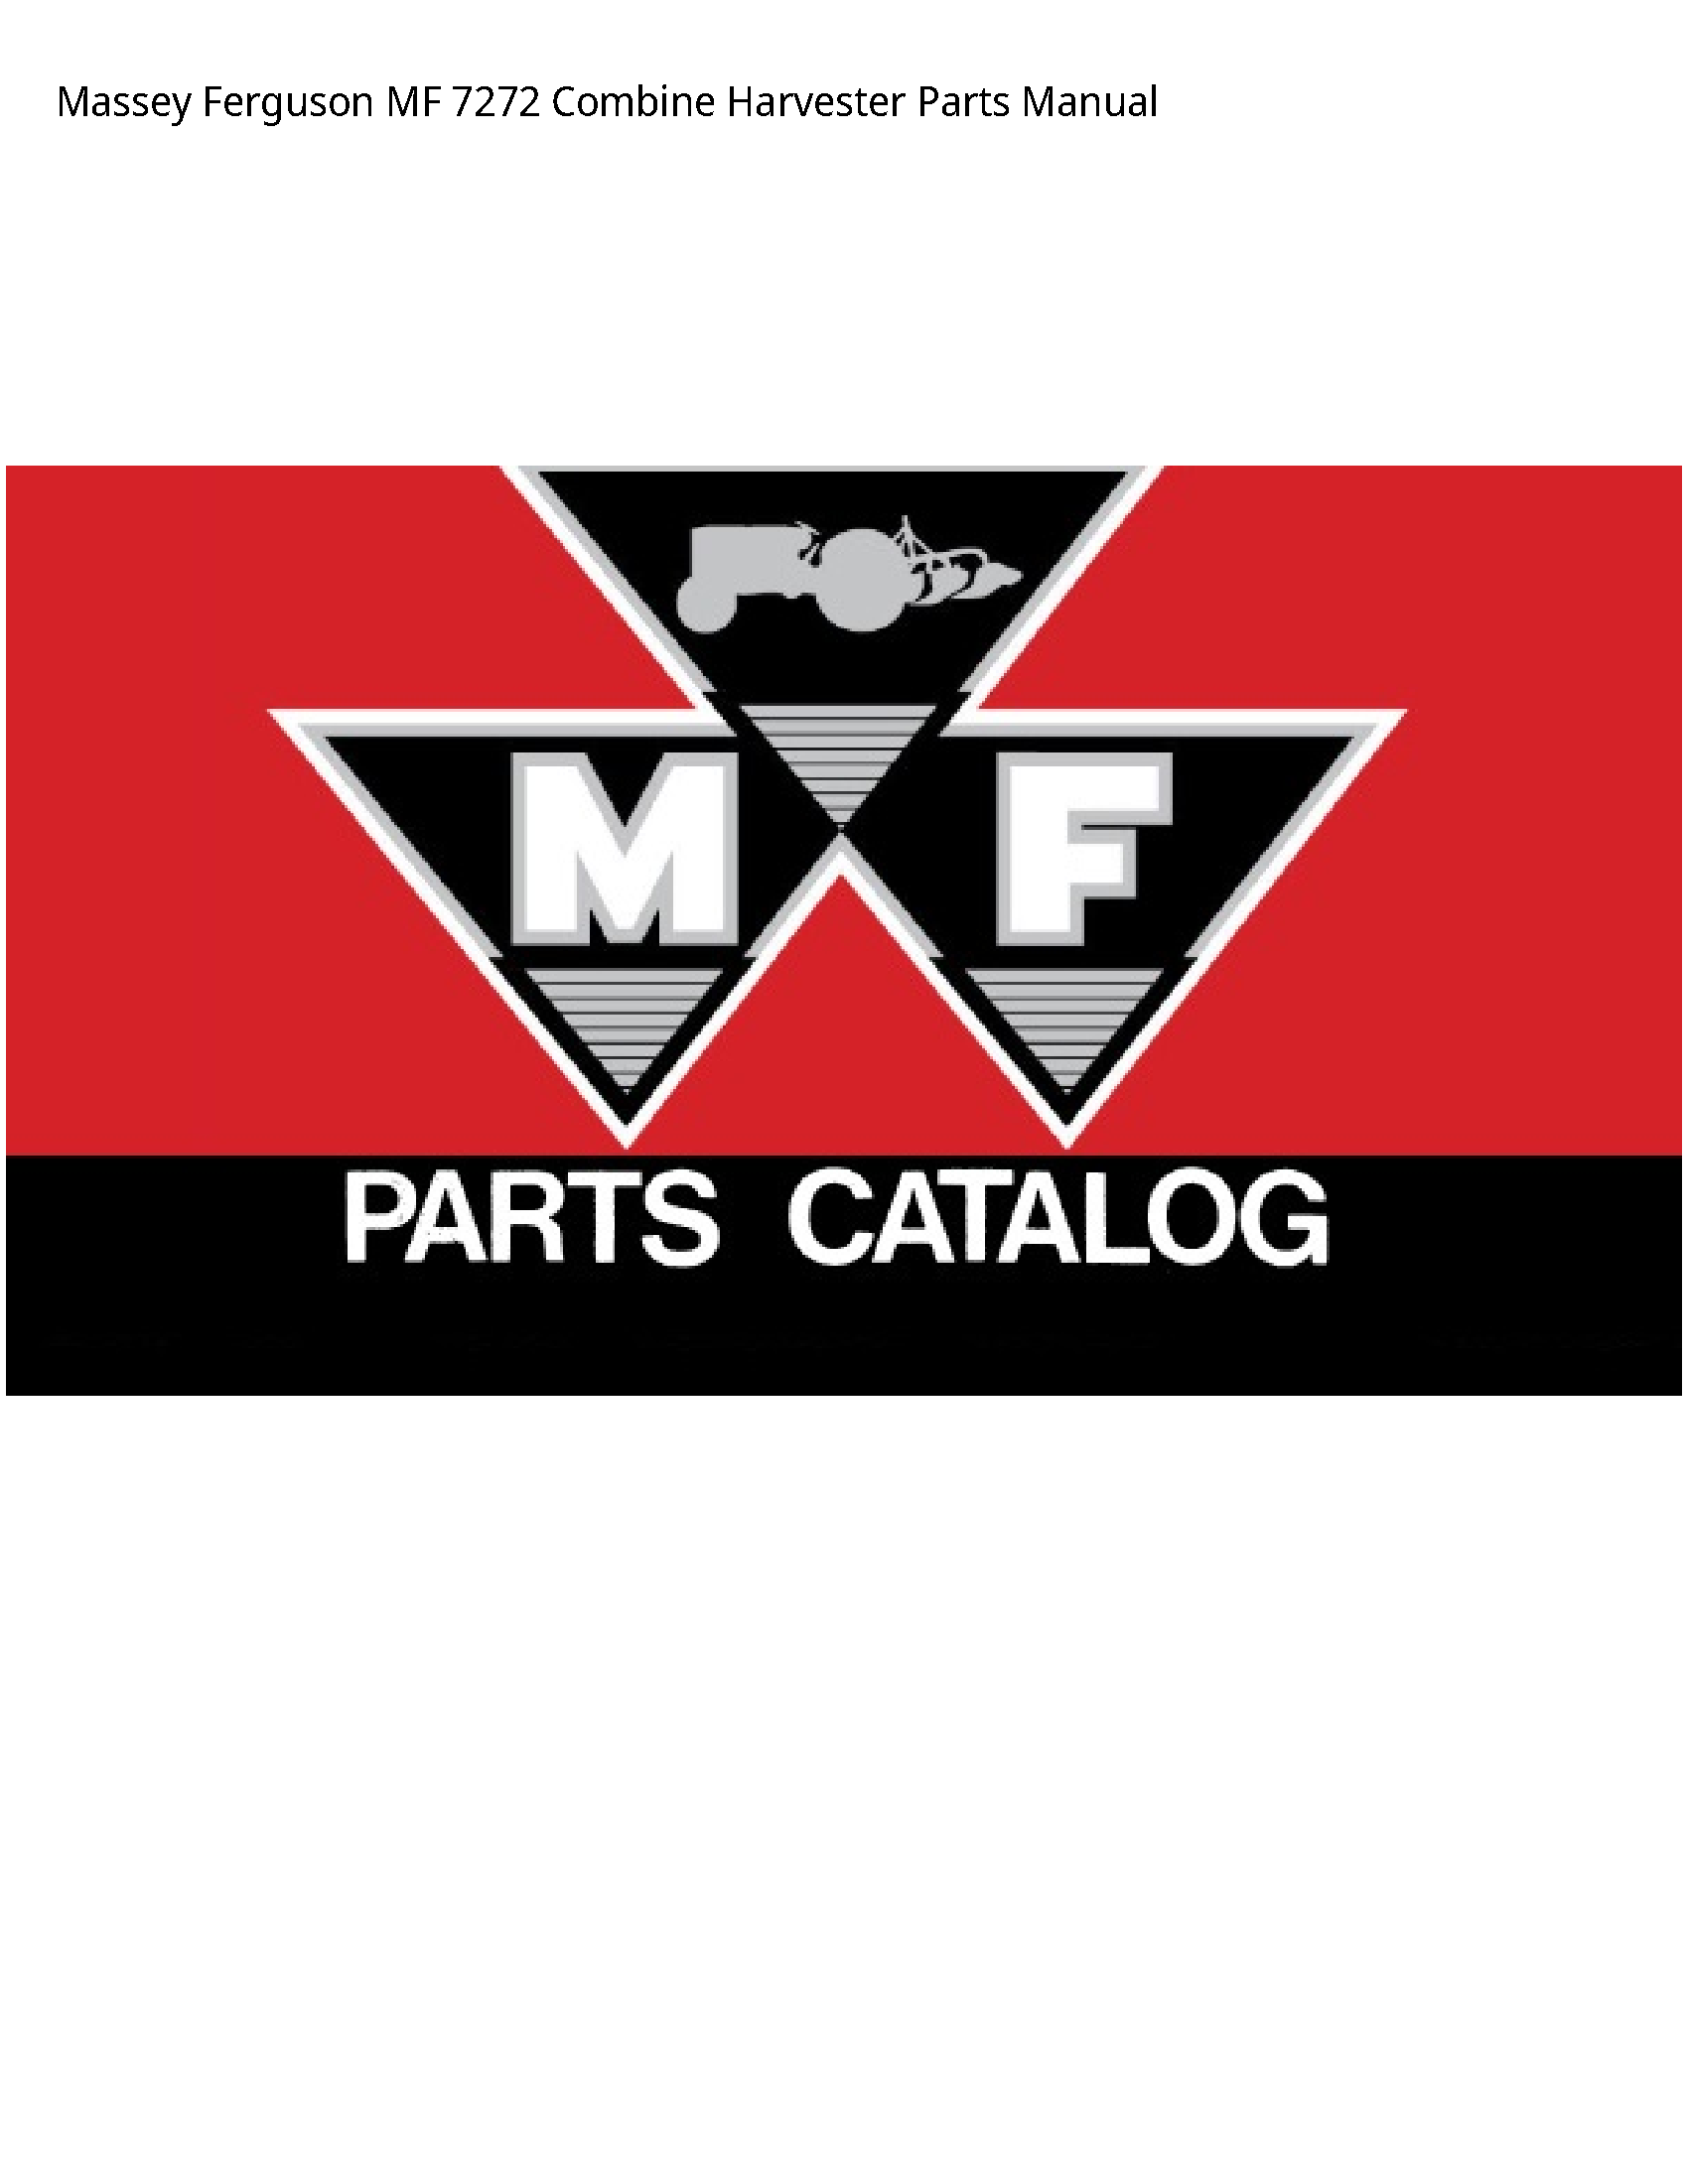 Massey Ferguson 7272 MF Combine Harvester Parts manual